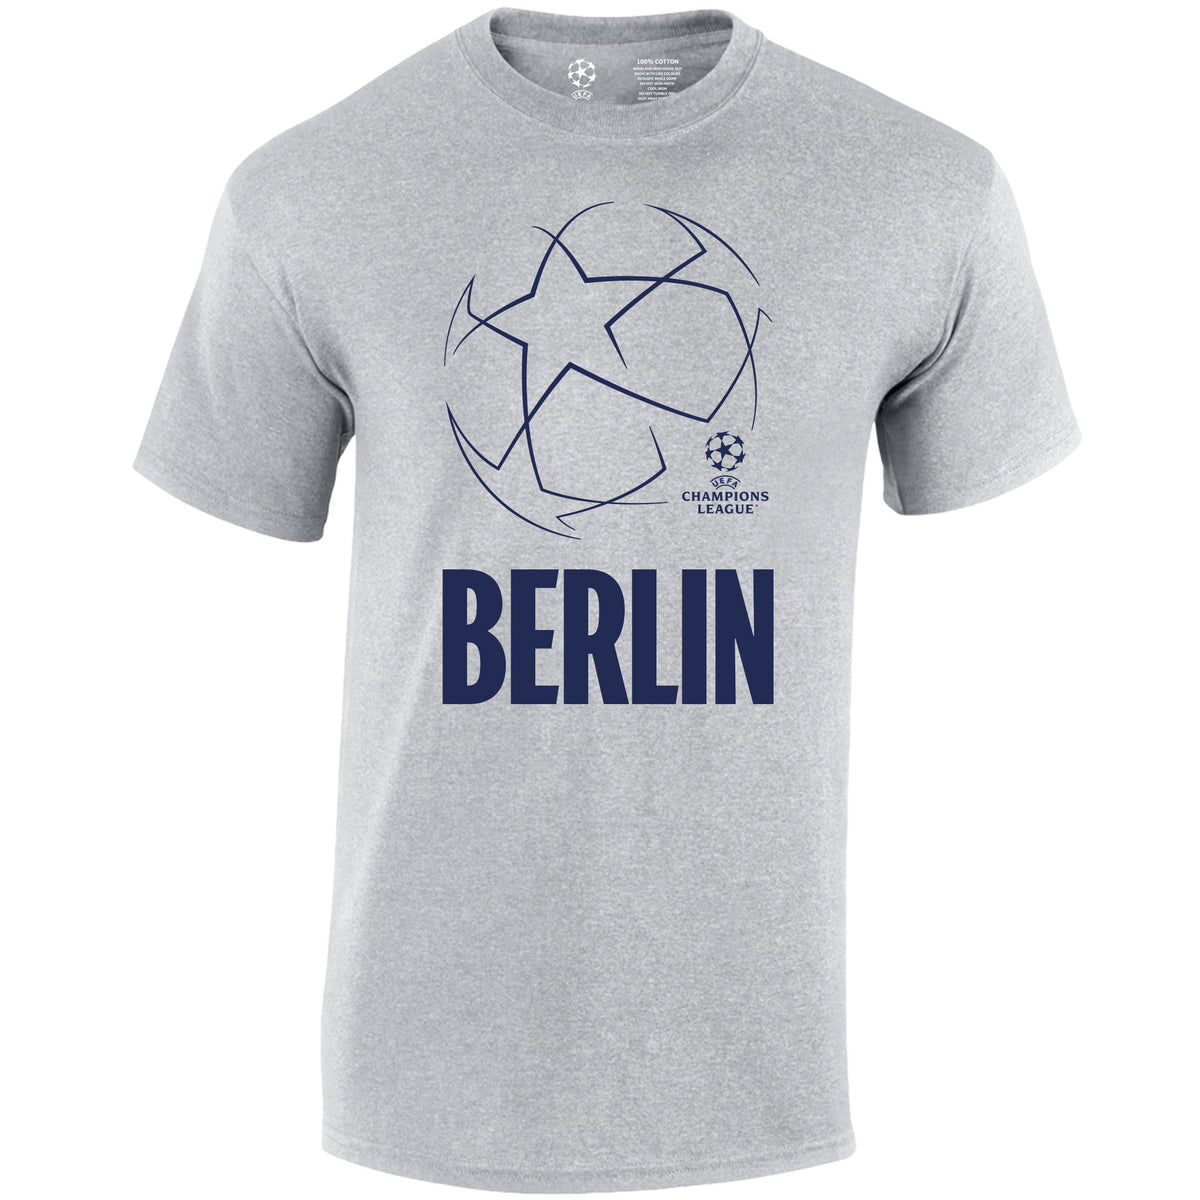 Champions League Starball Berlin City T-Shirt Grey